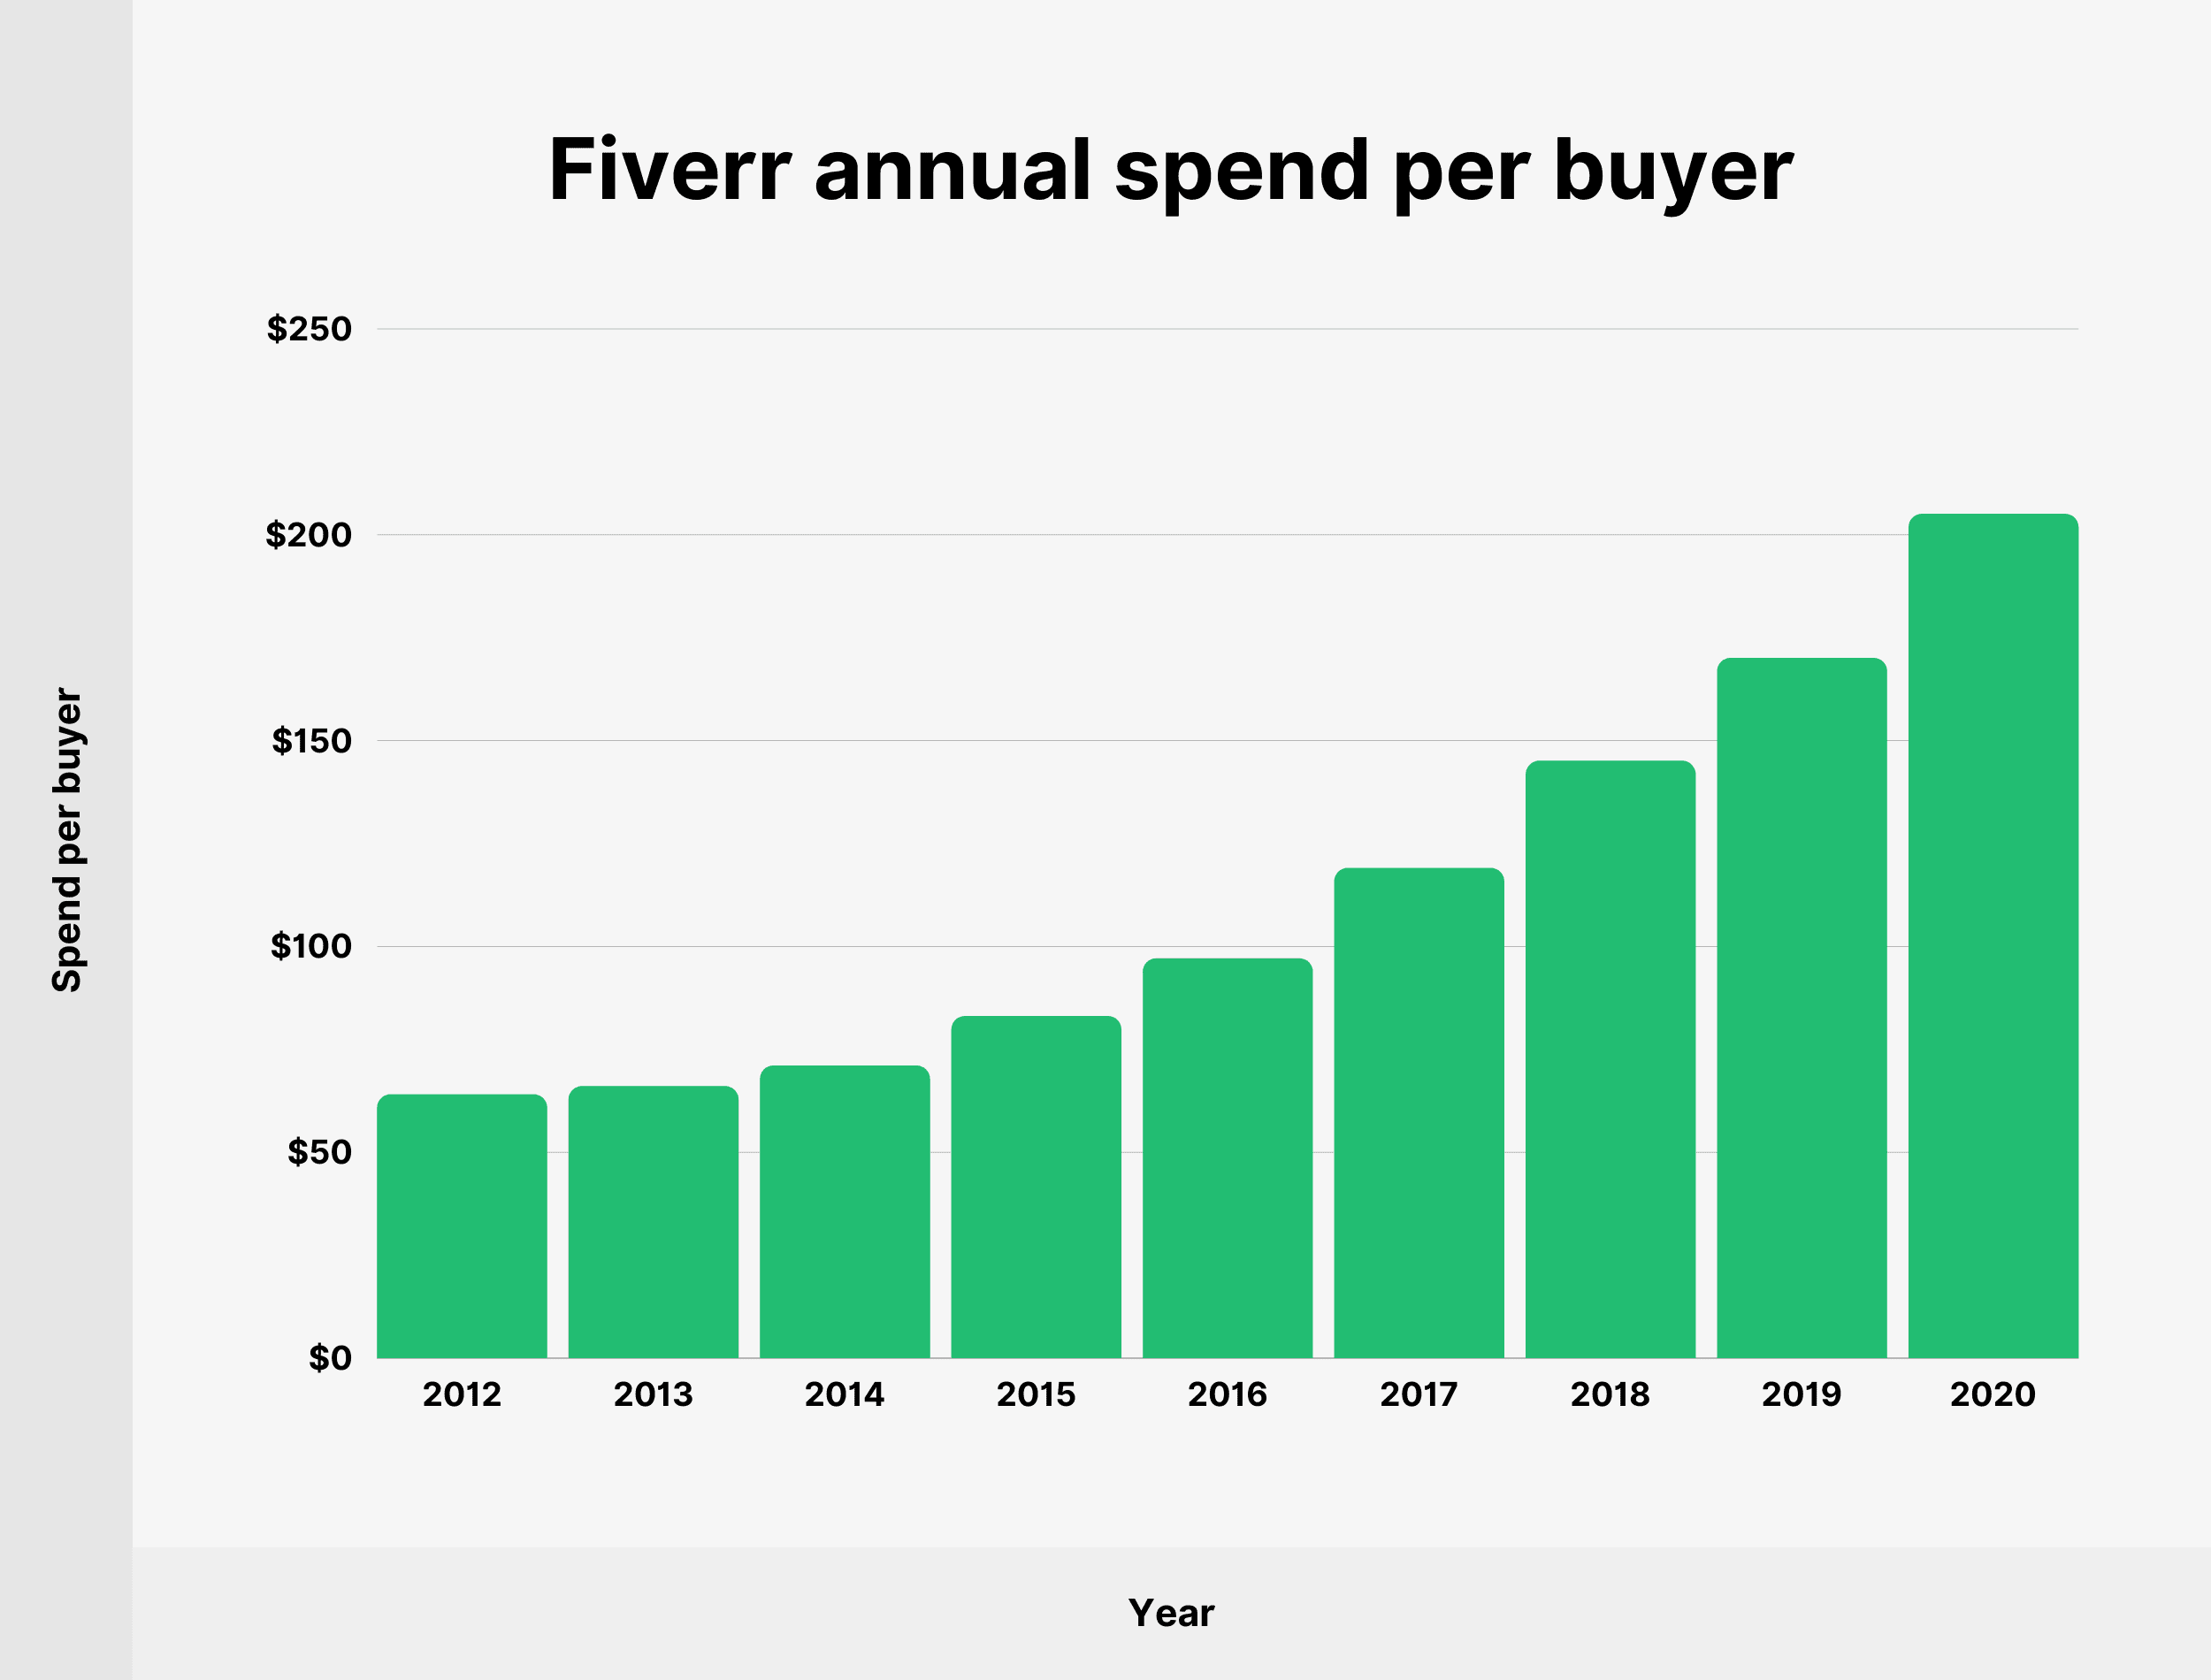 Fiverr annual spend per buyer